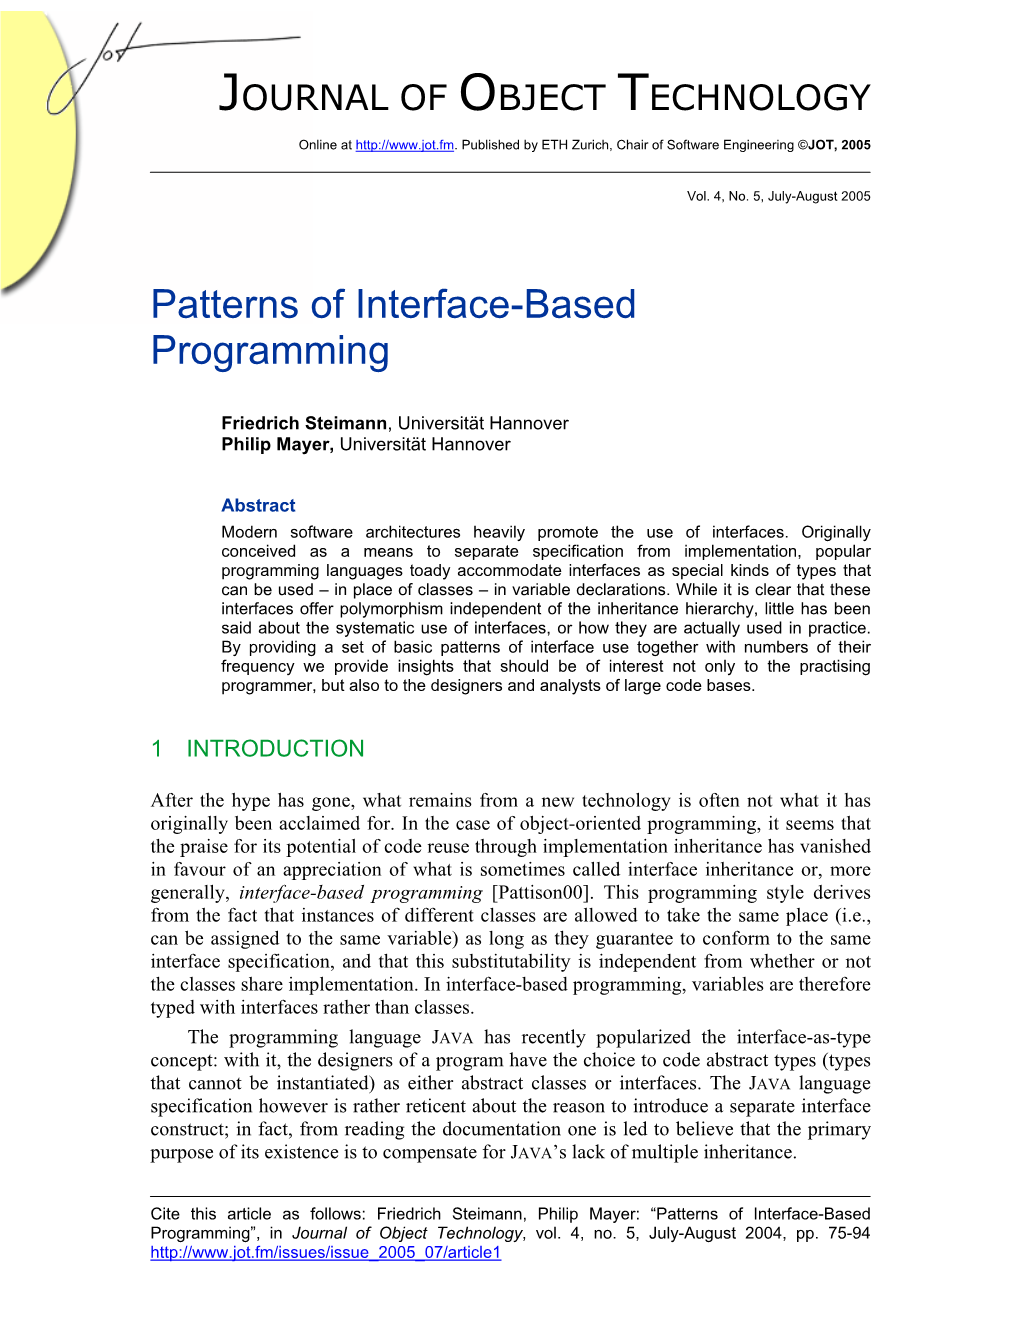 Patterns of Interface-Based Programming